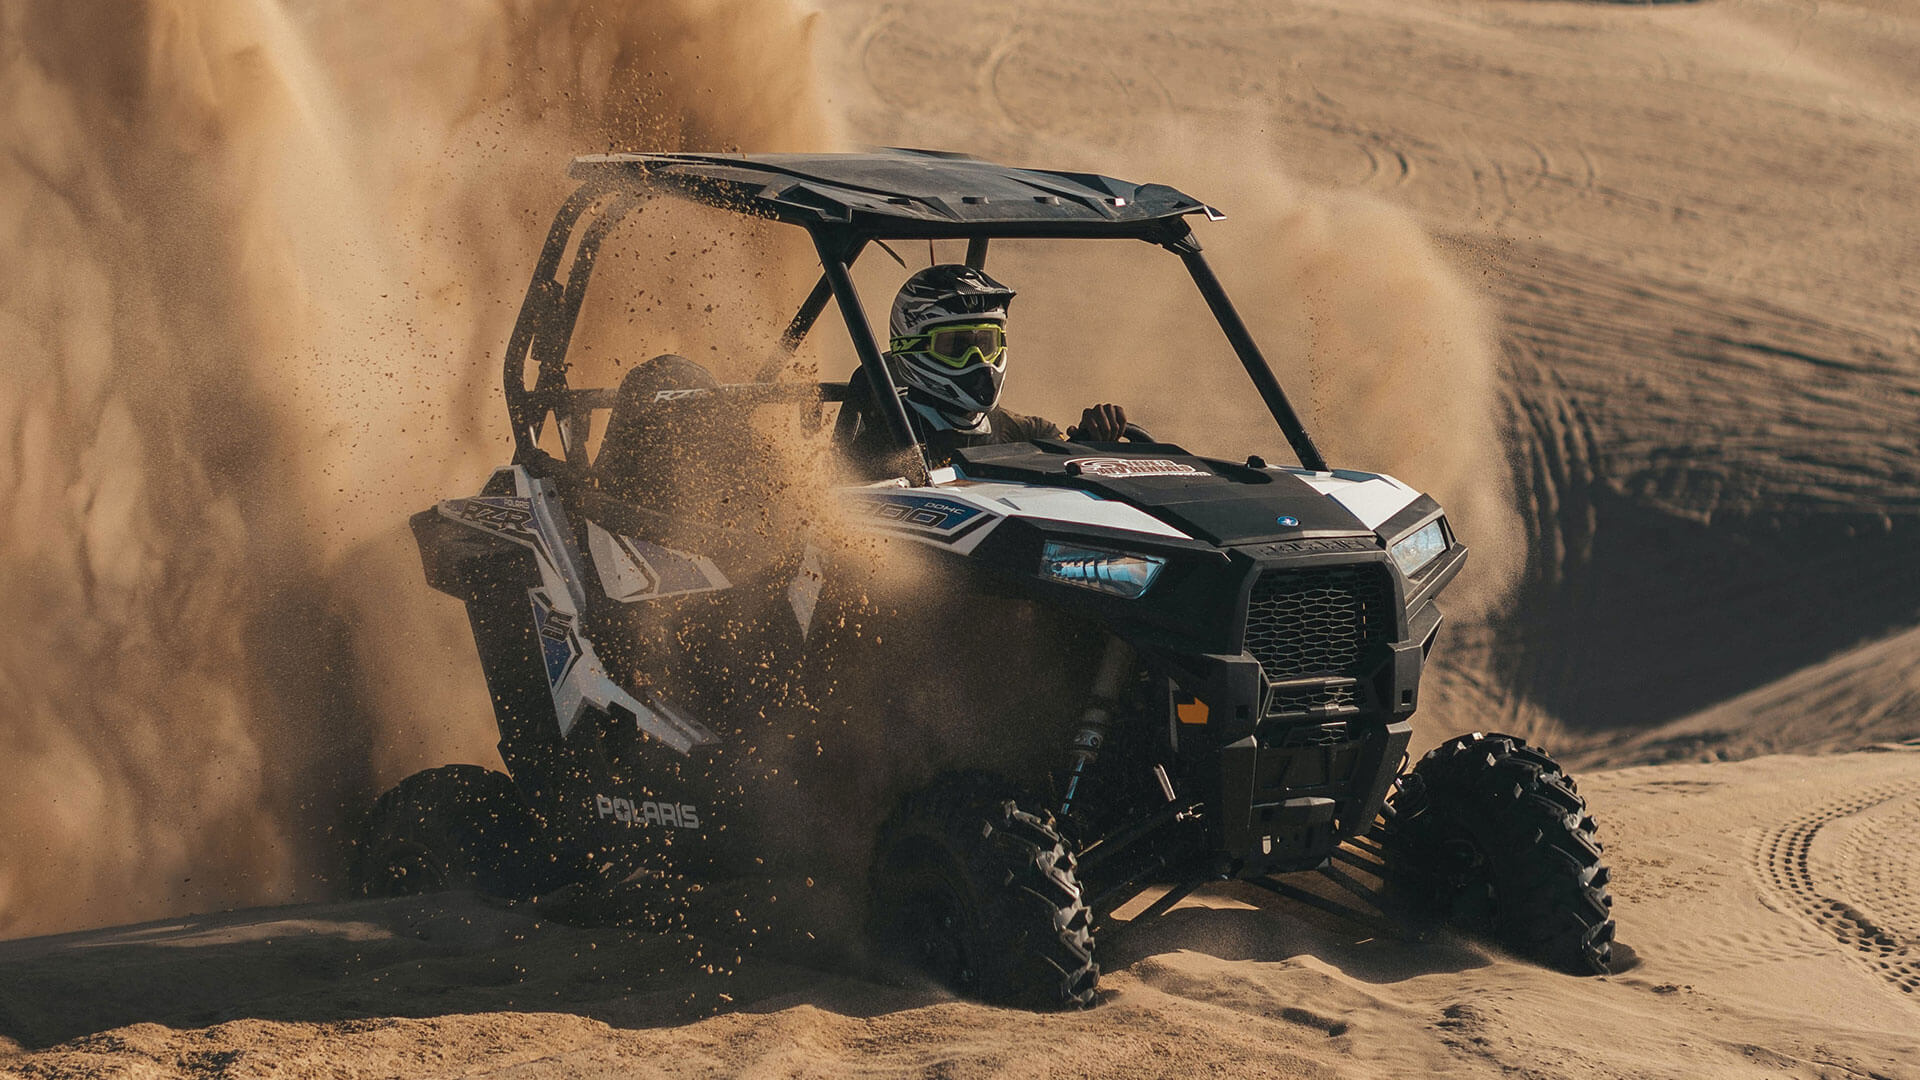 ATV powersports vehicle in the desert